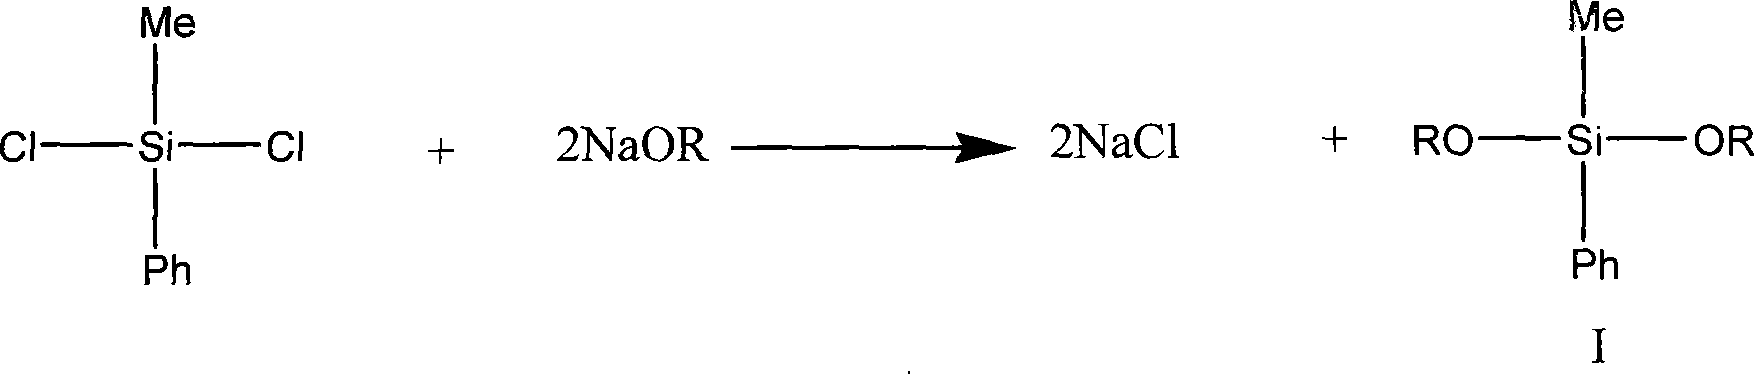 Safe separation method for increasing yield of methyl phenyl dialkoxy silicane